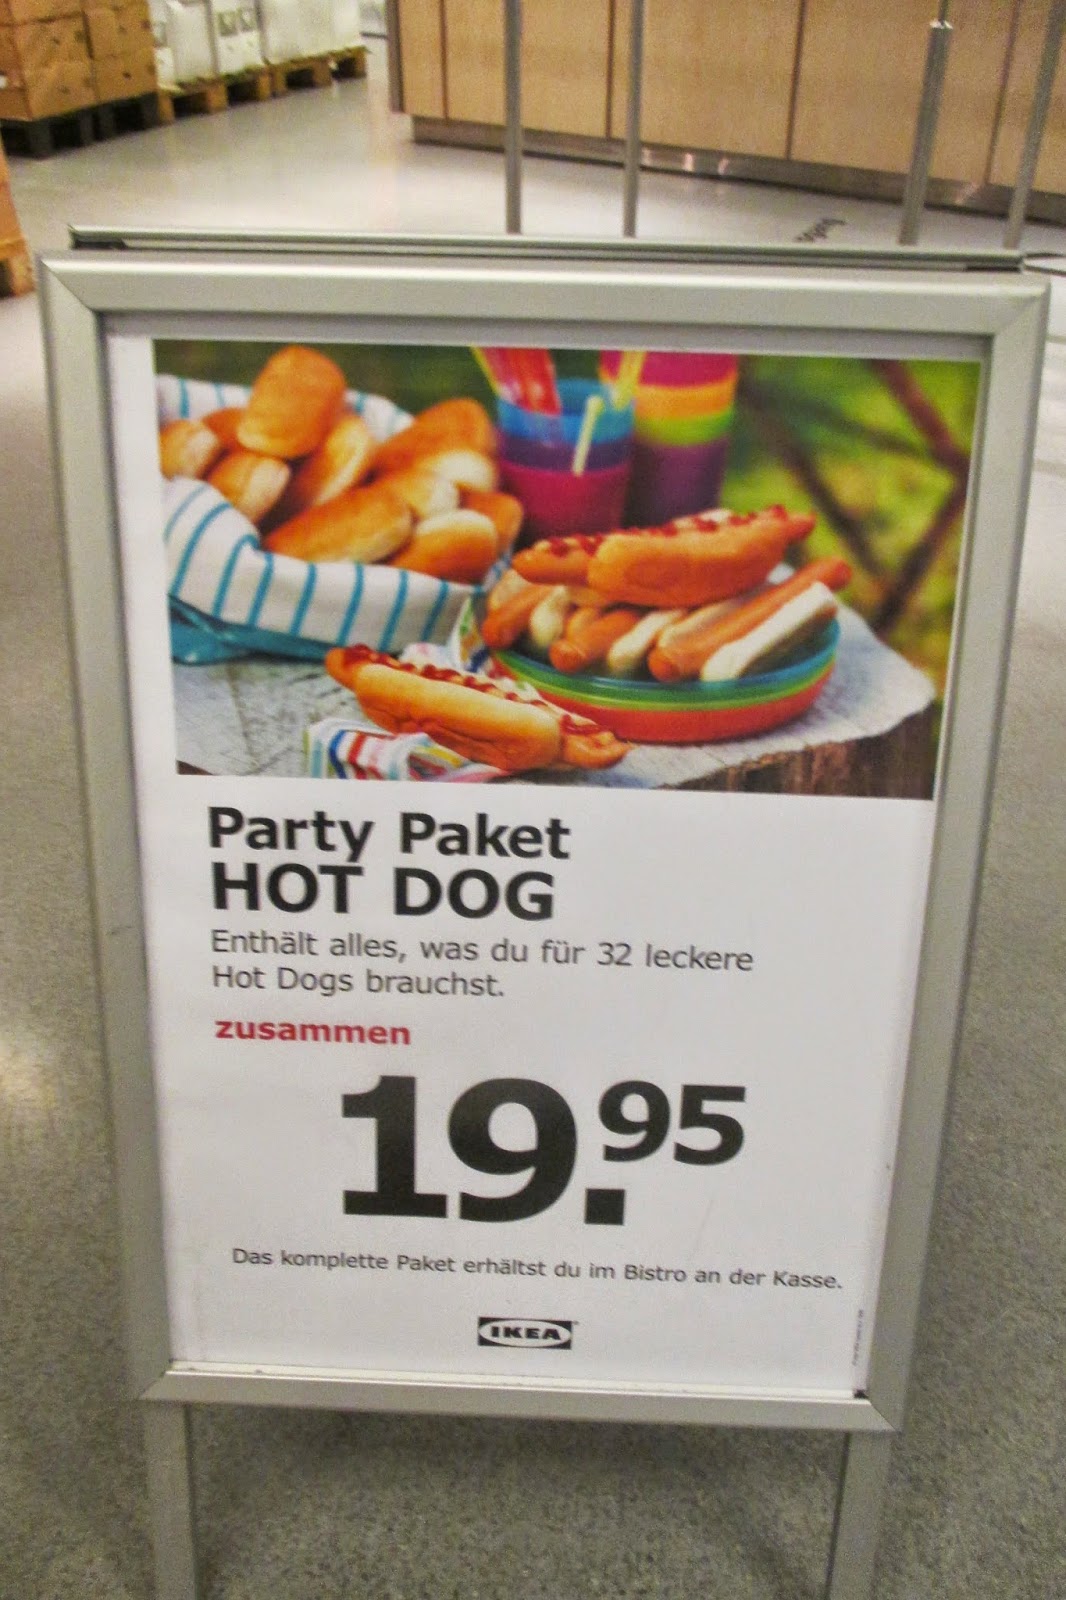 The Umami Spark: The Ikea Hot Dog Pack